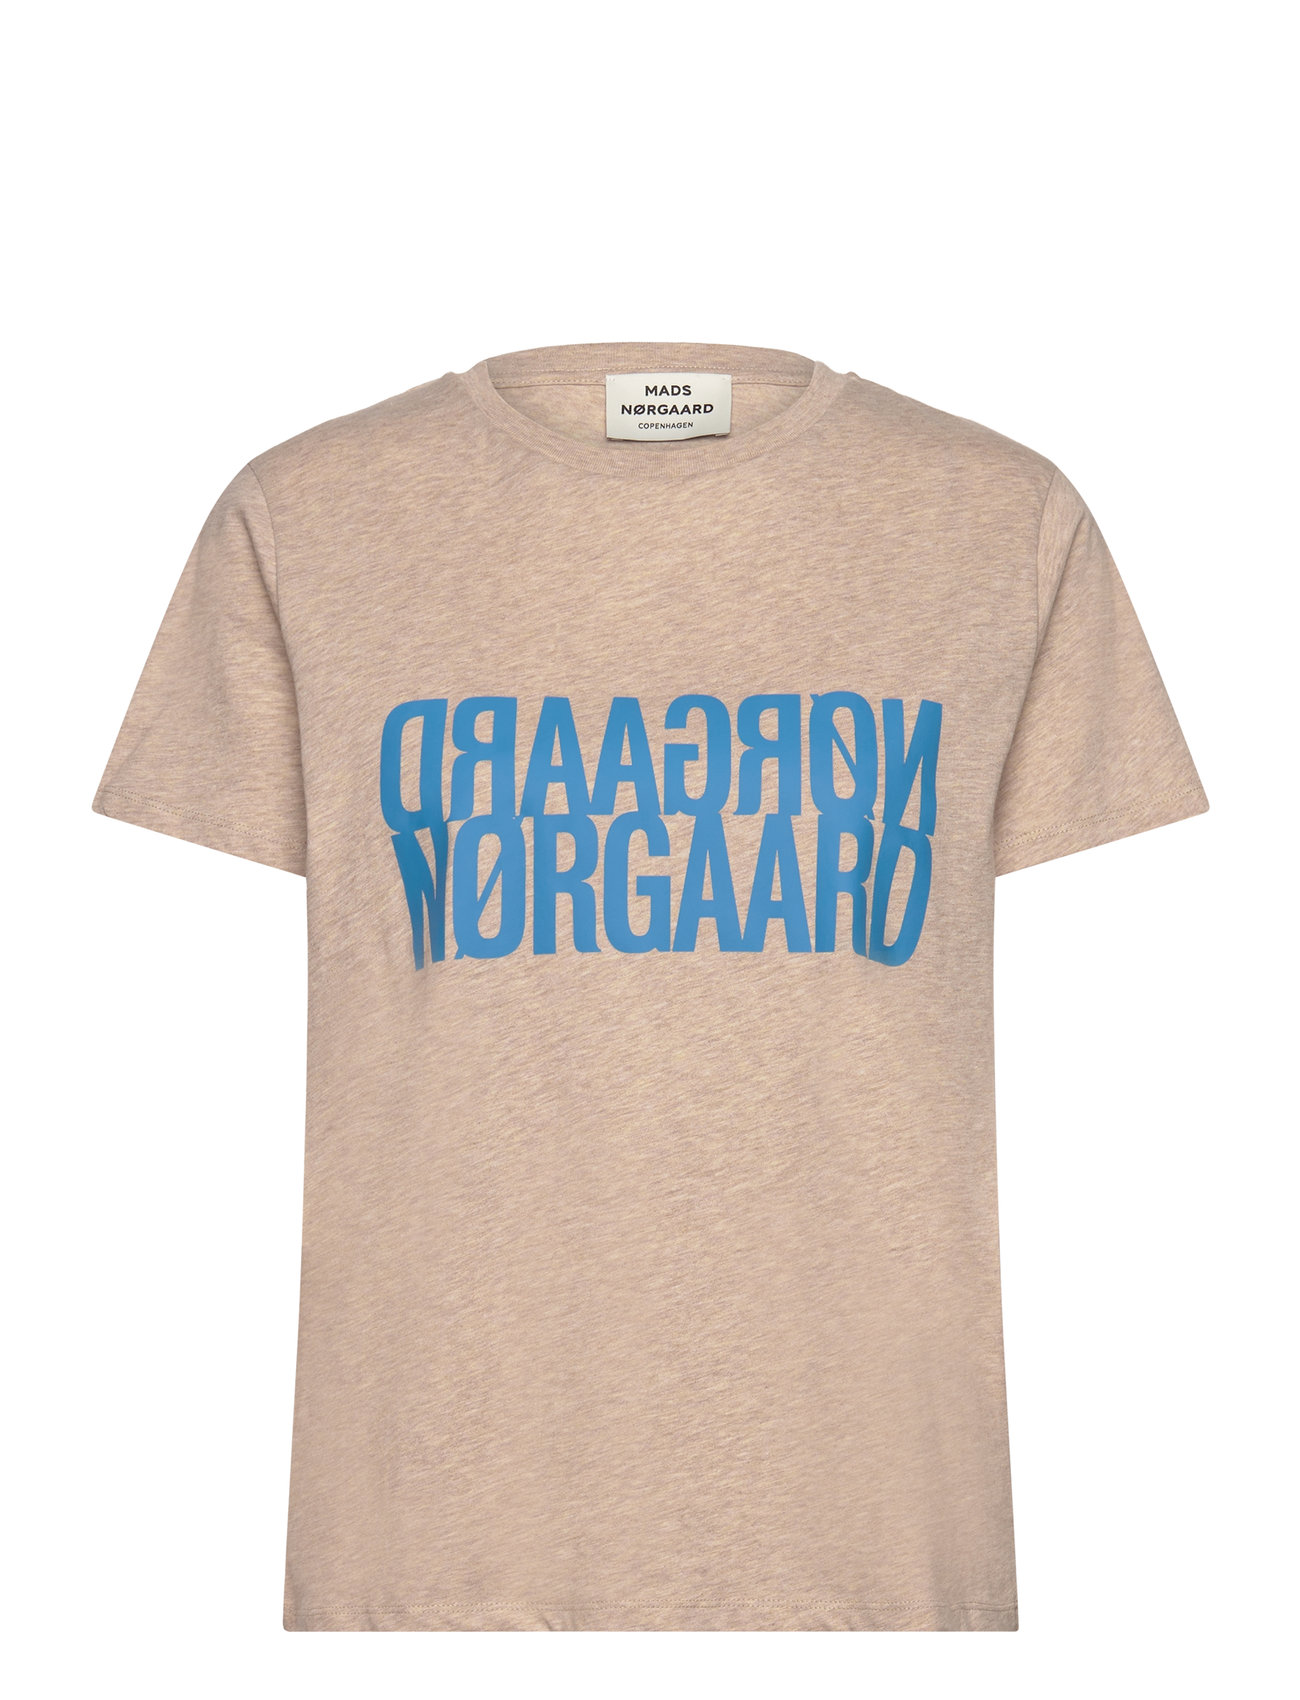 Single Organic Trenda P Tee Tops T-shirts & Tops Short-sleeved Beige Mads Nørgaard